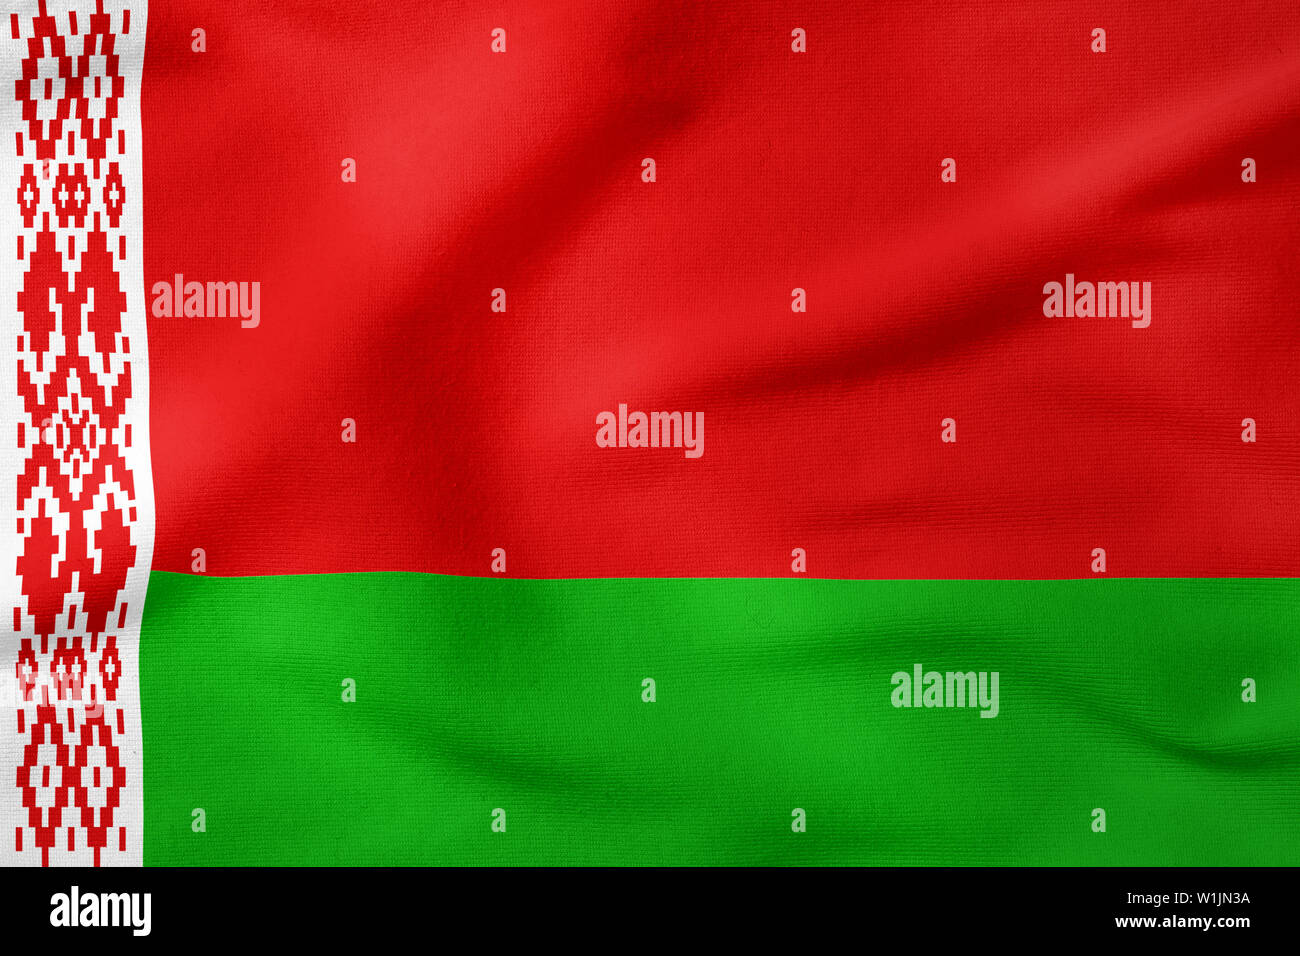 National Flag of Belarus - Rectangular Shape patriotic symbol Stock Photo